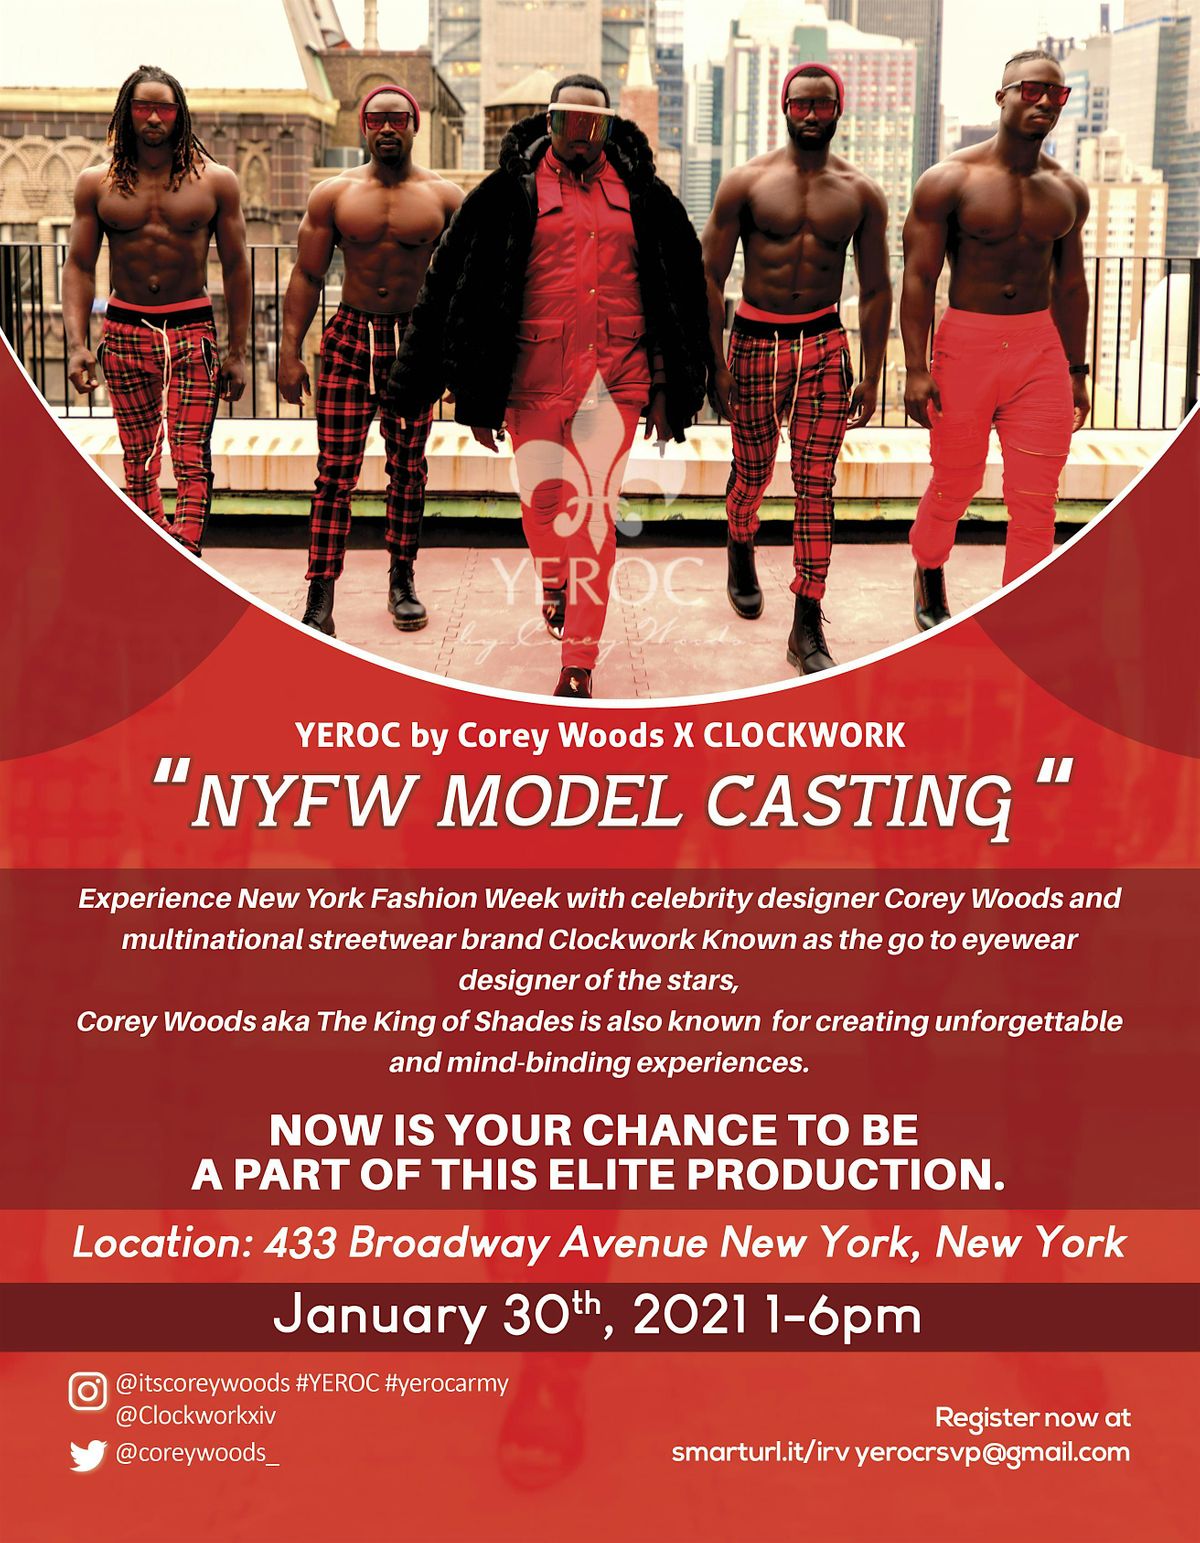 New York Fashion Week Model Casting for Celebrity Designer Corey Woods